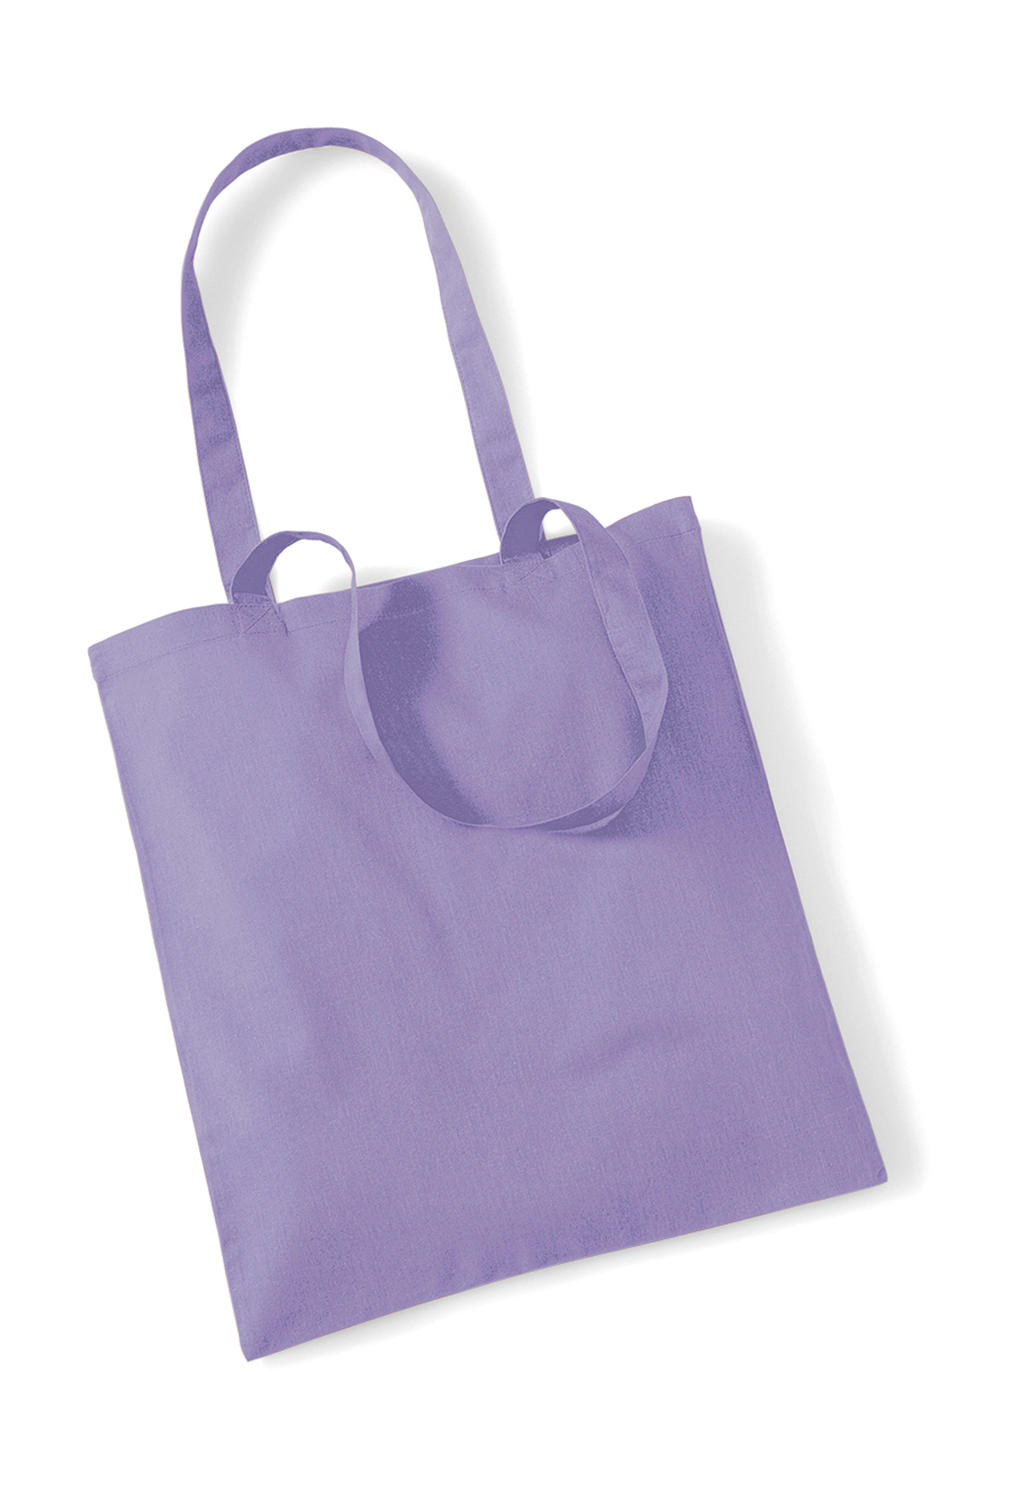 Bag for Life - Long Handles - lavender